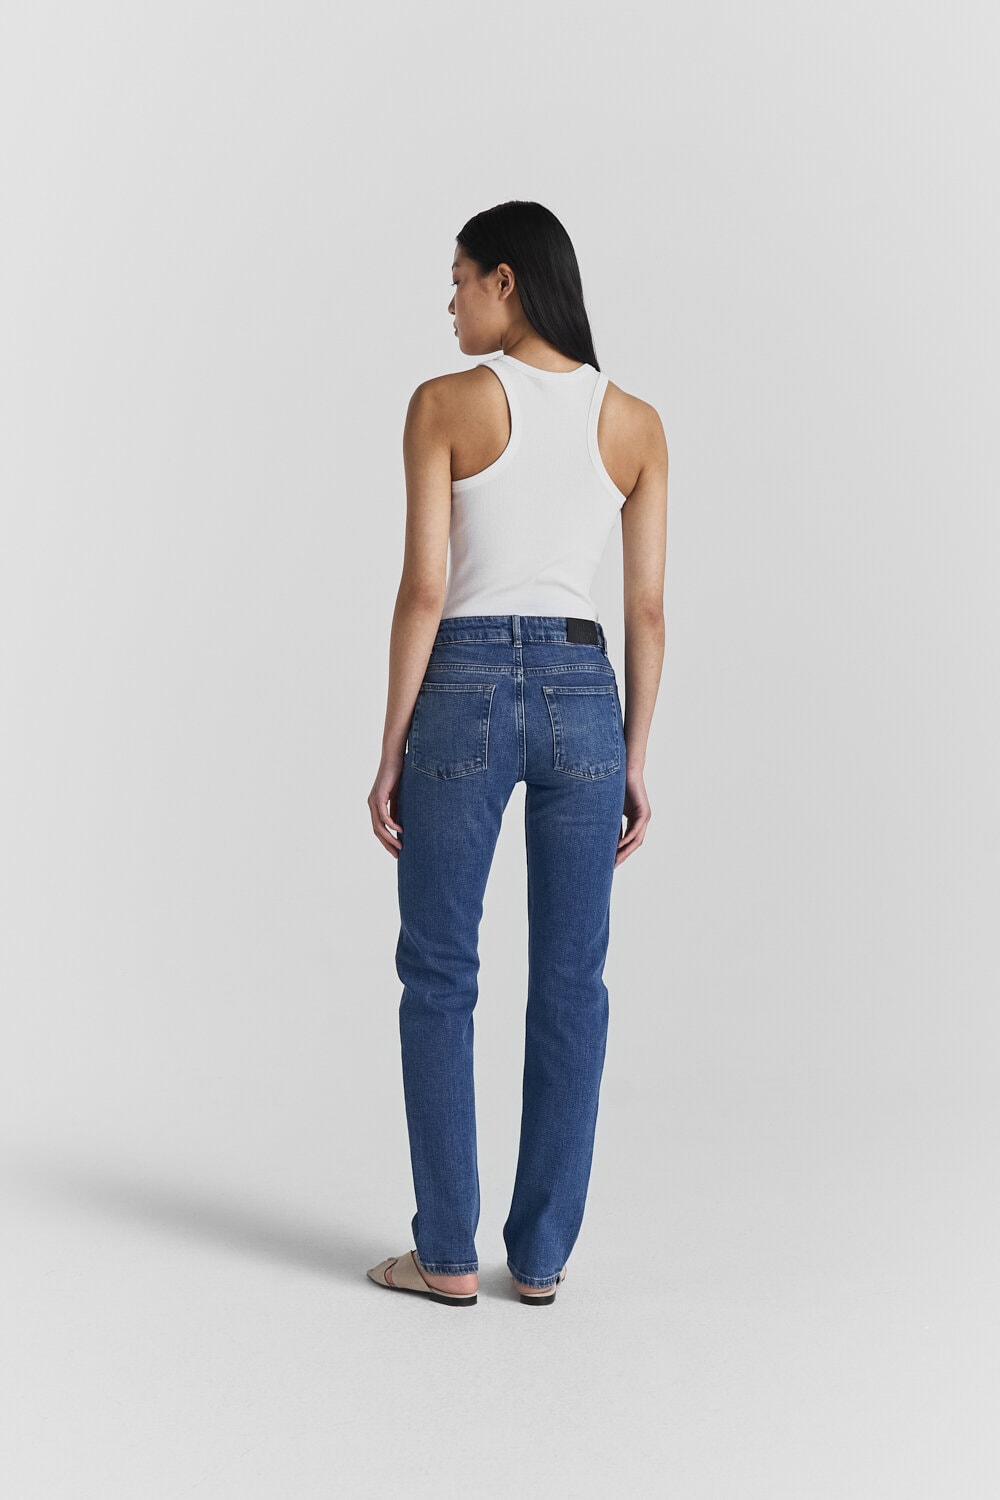 Wendy Comfort Jeans